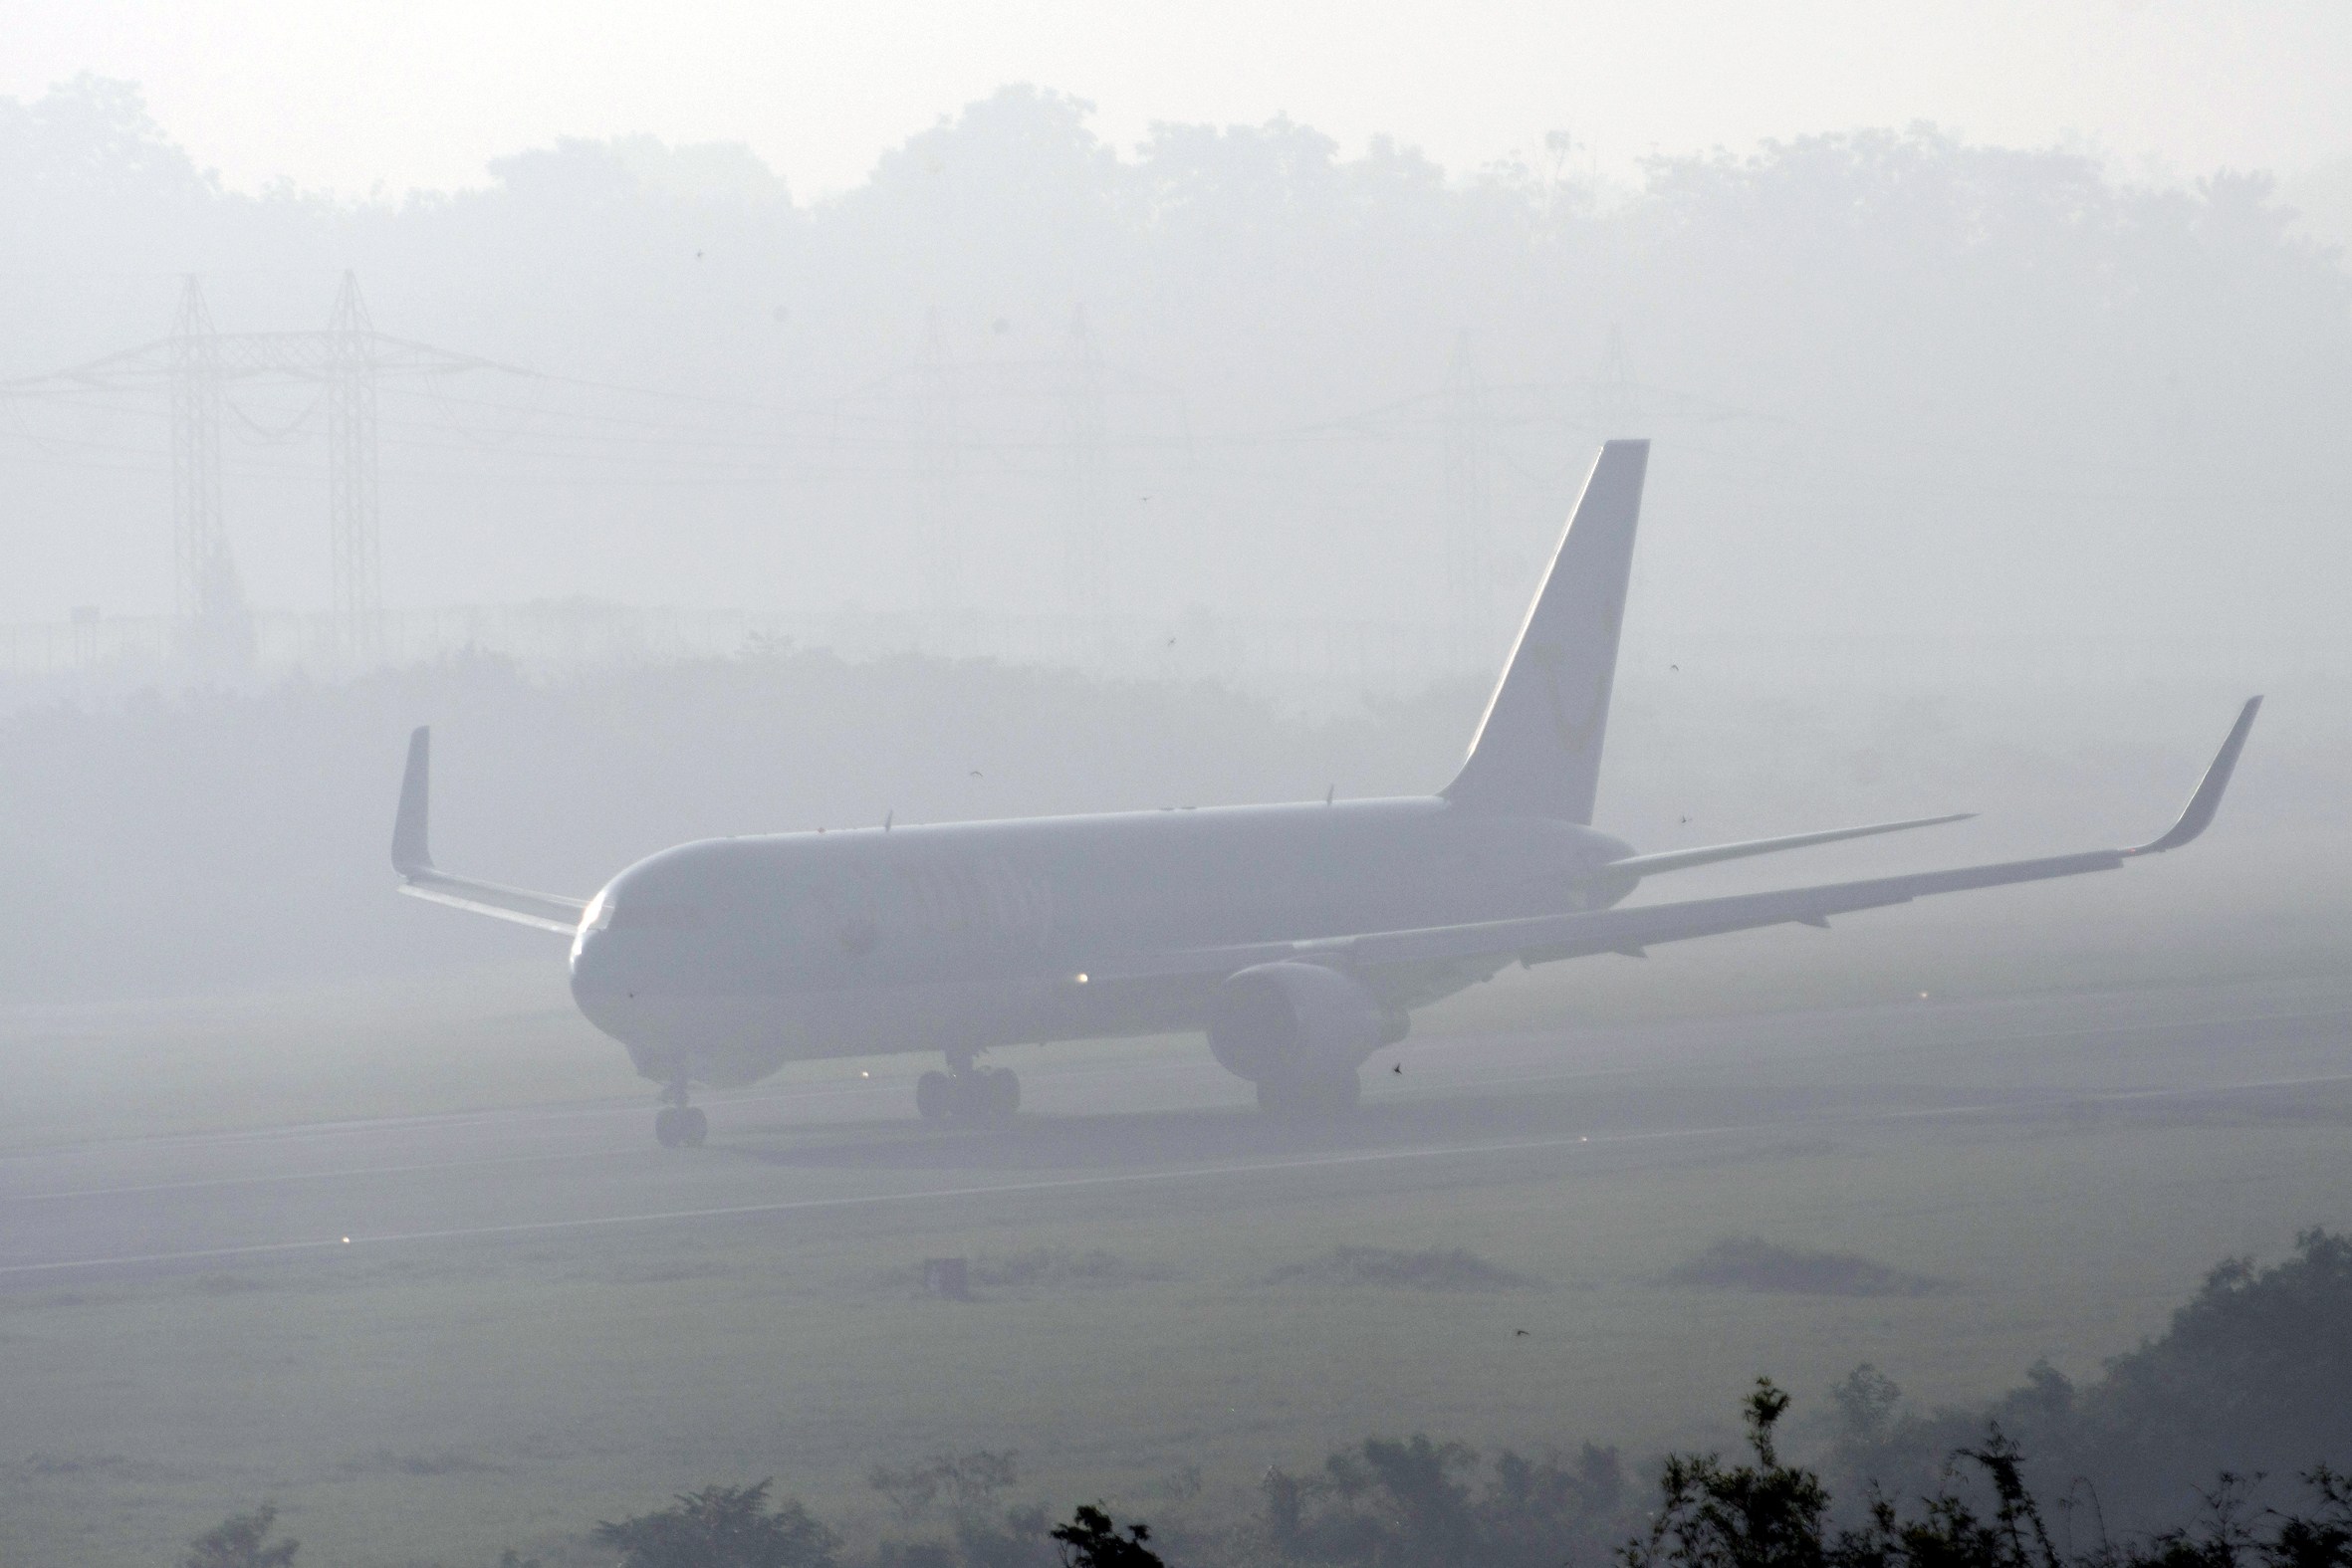 Fog cancels flights from Christchurch Airport - Star.kiwi